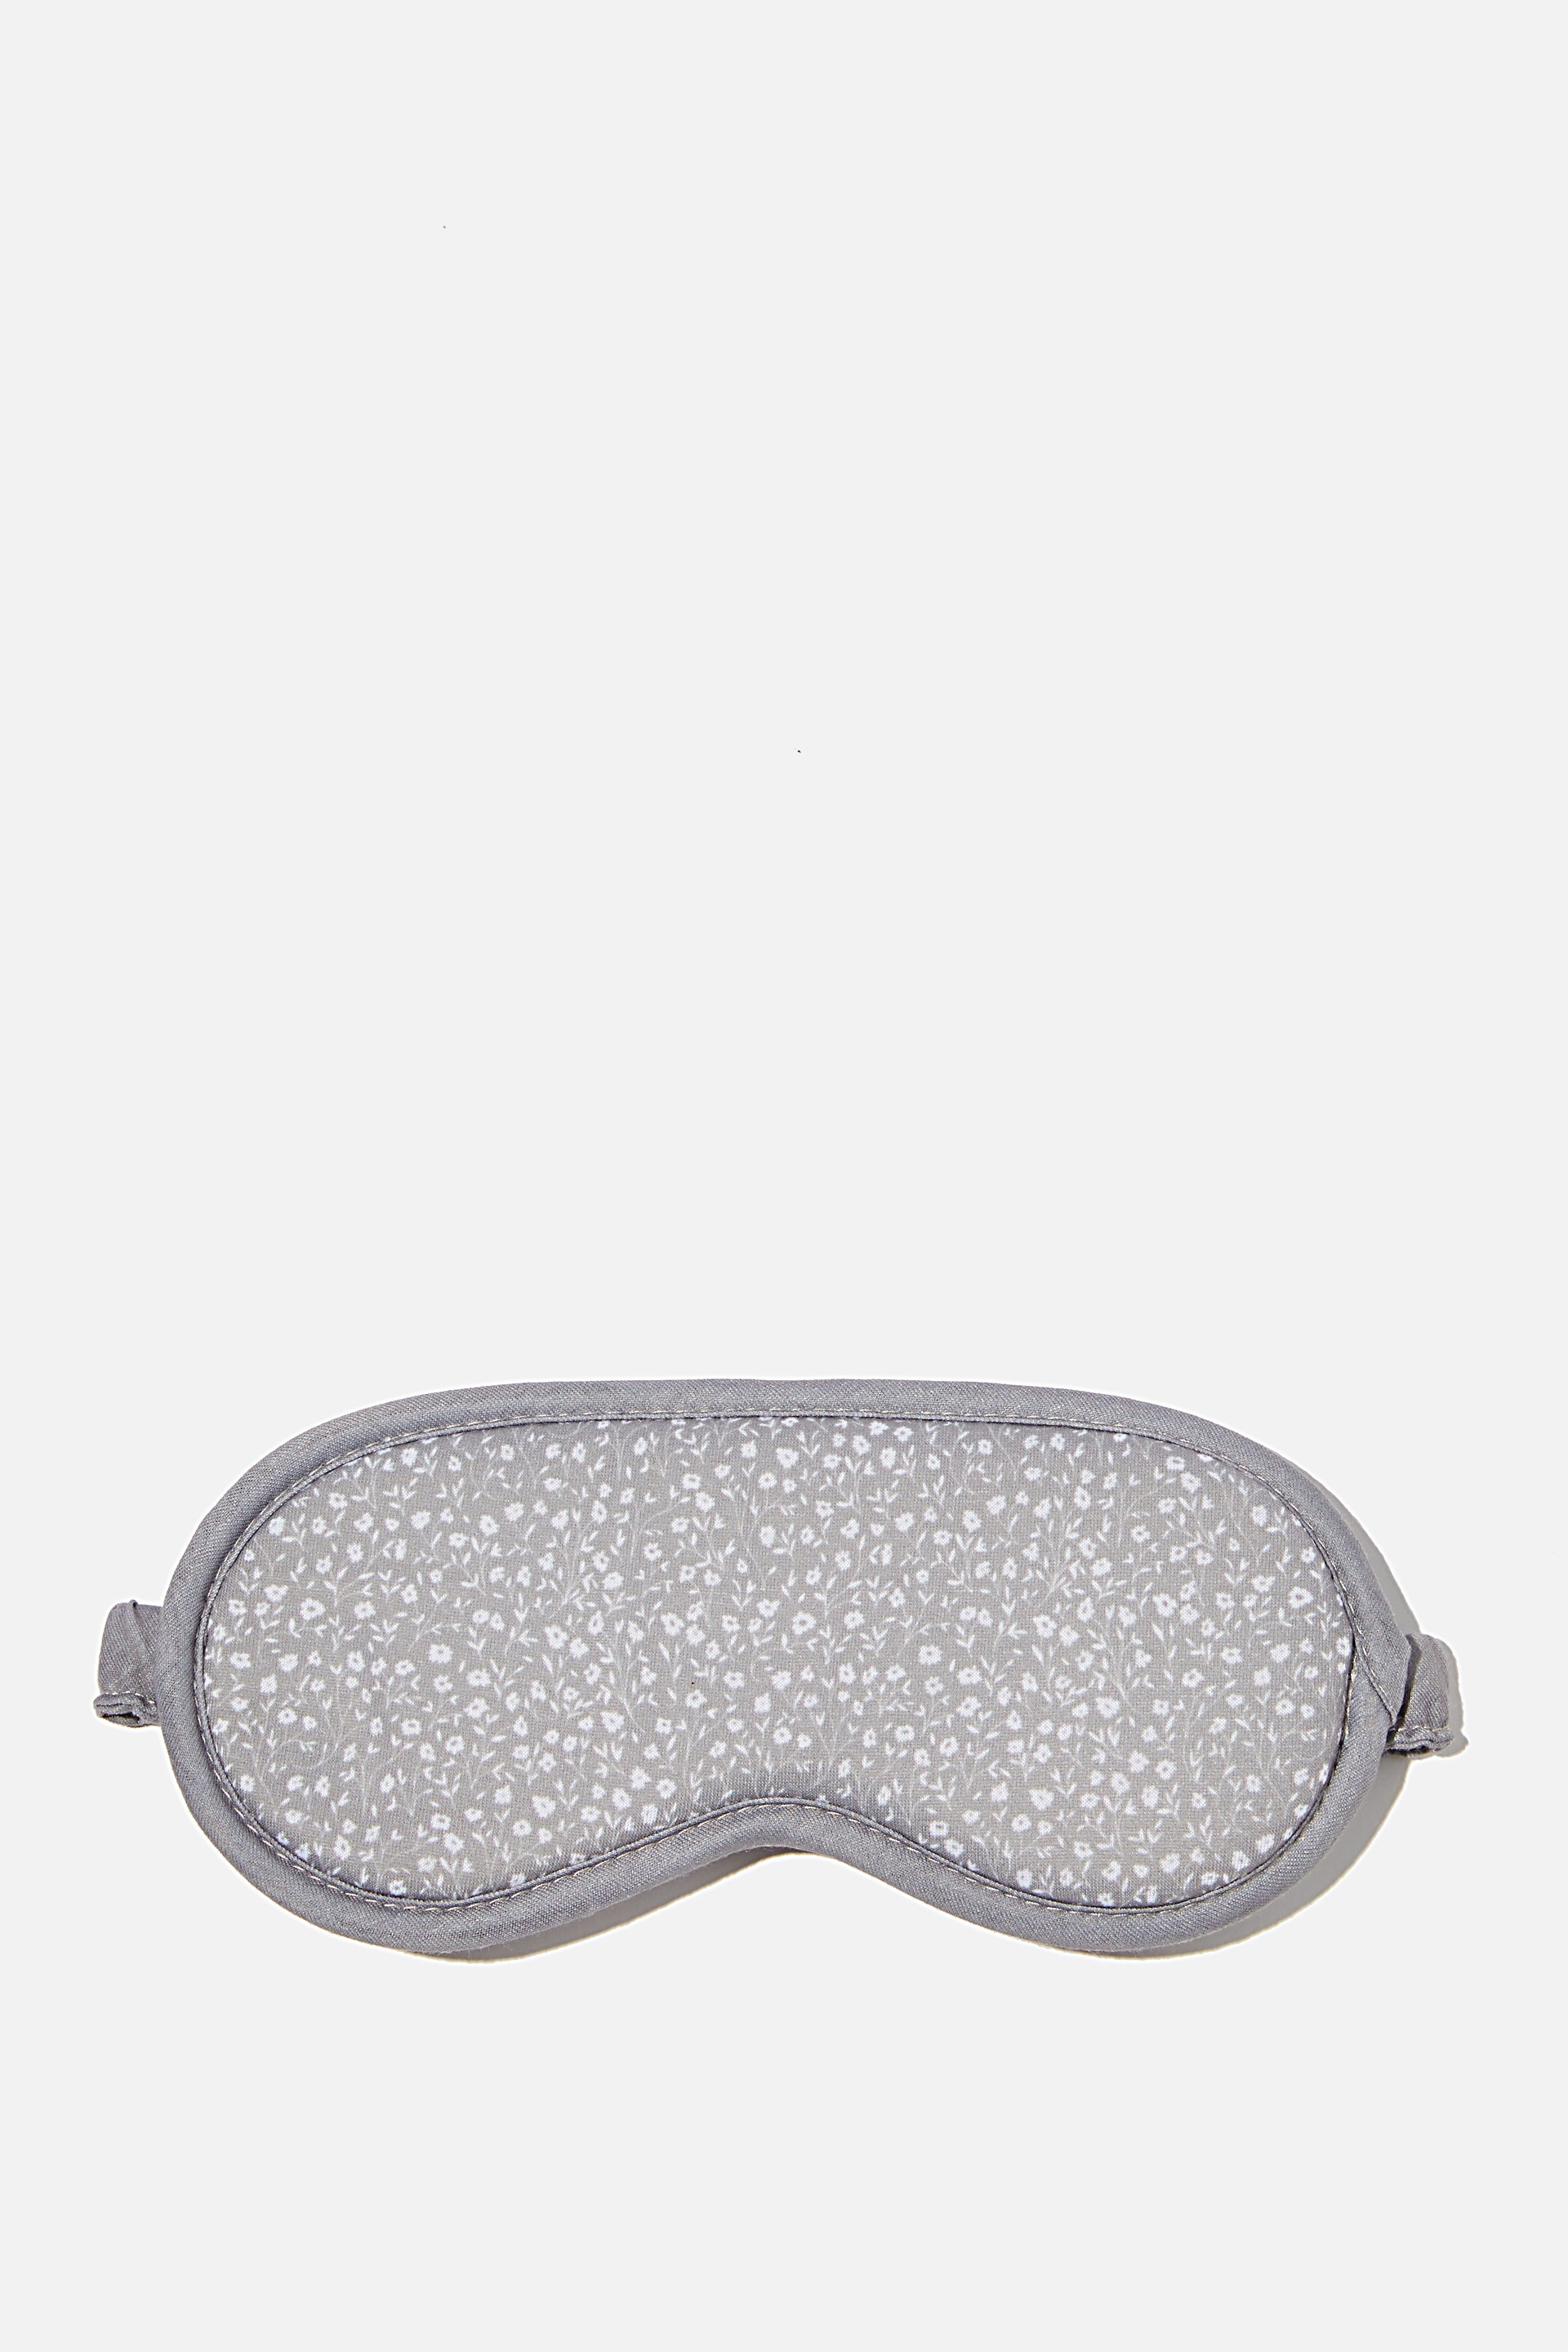 Typo - Premium Sleep Eye Mask - Cool grey meadow ditsy